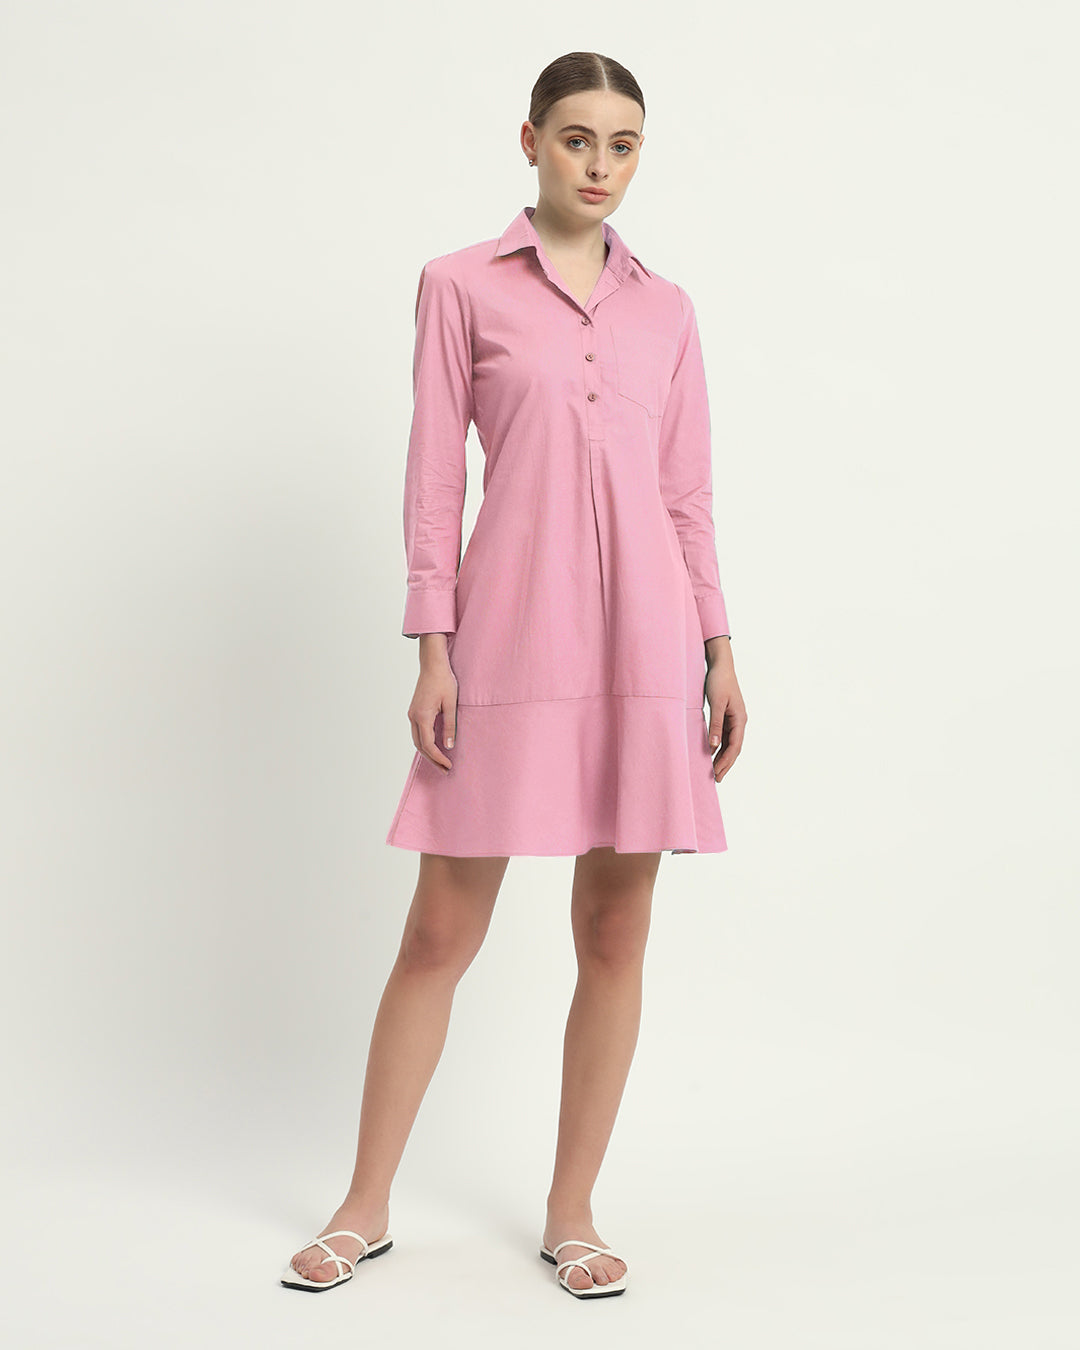 The Fondant Pink Medina Cotton Dress